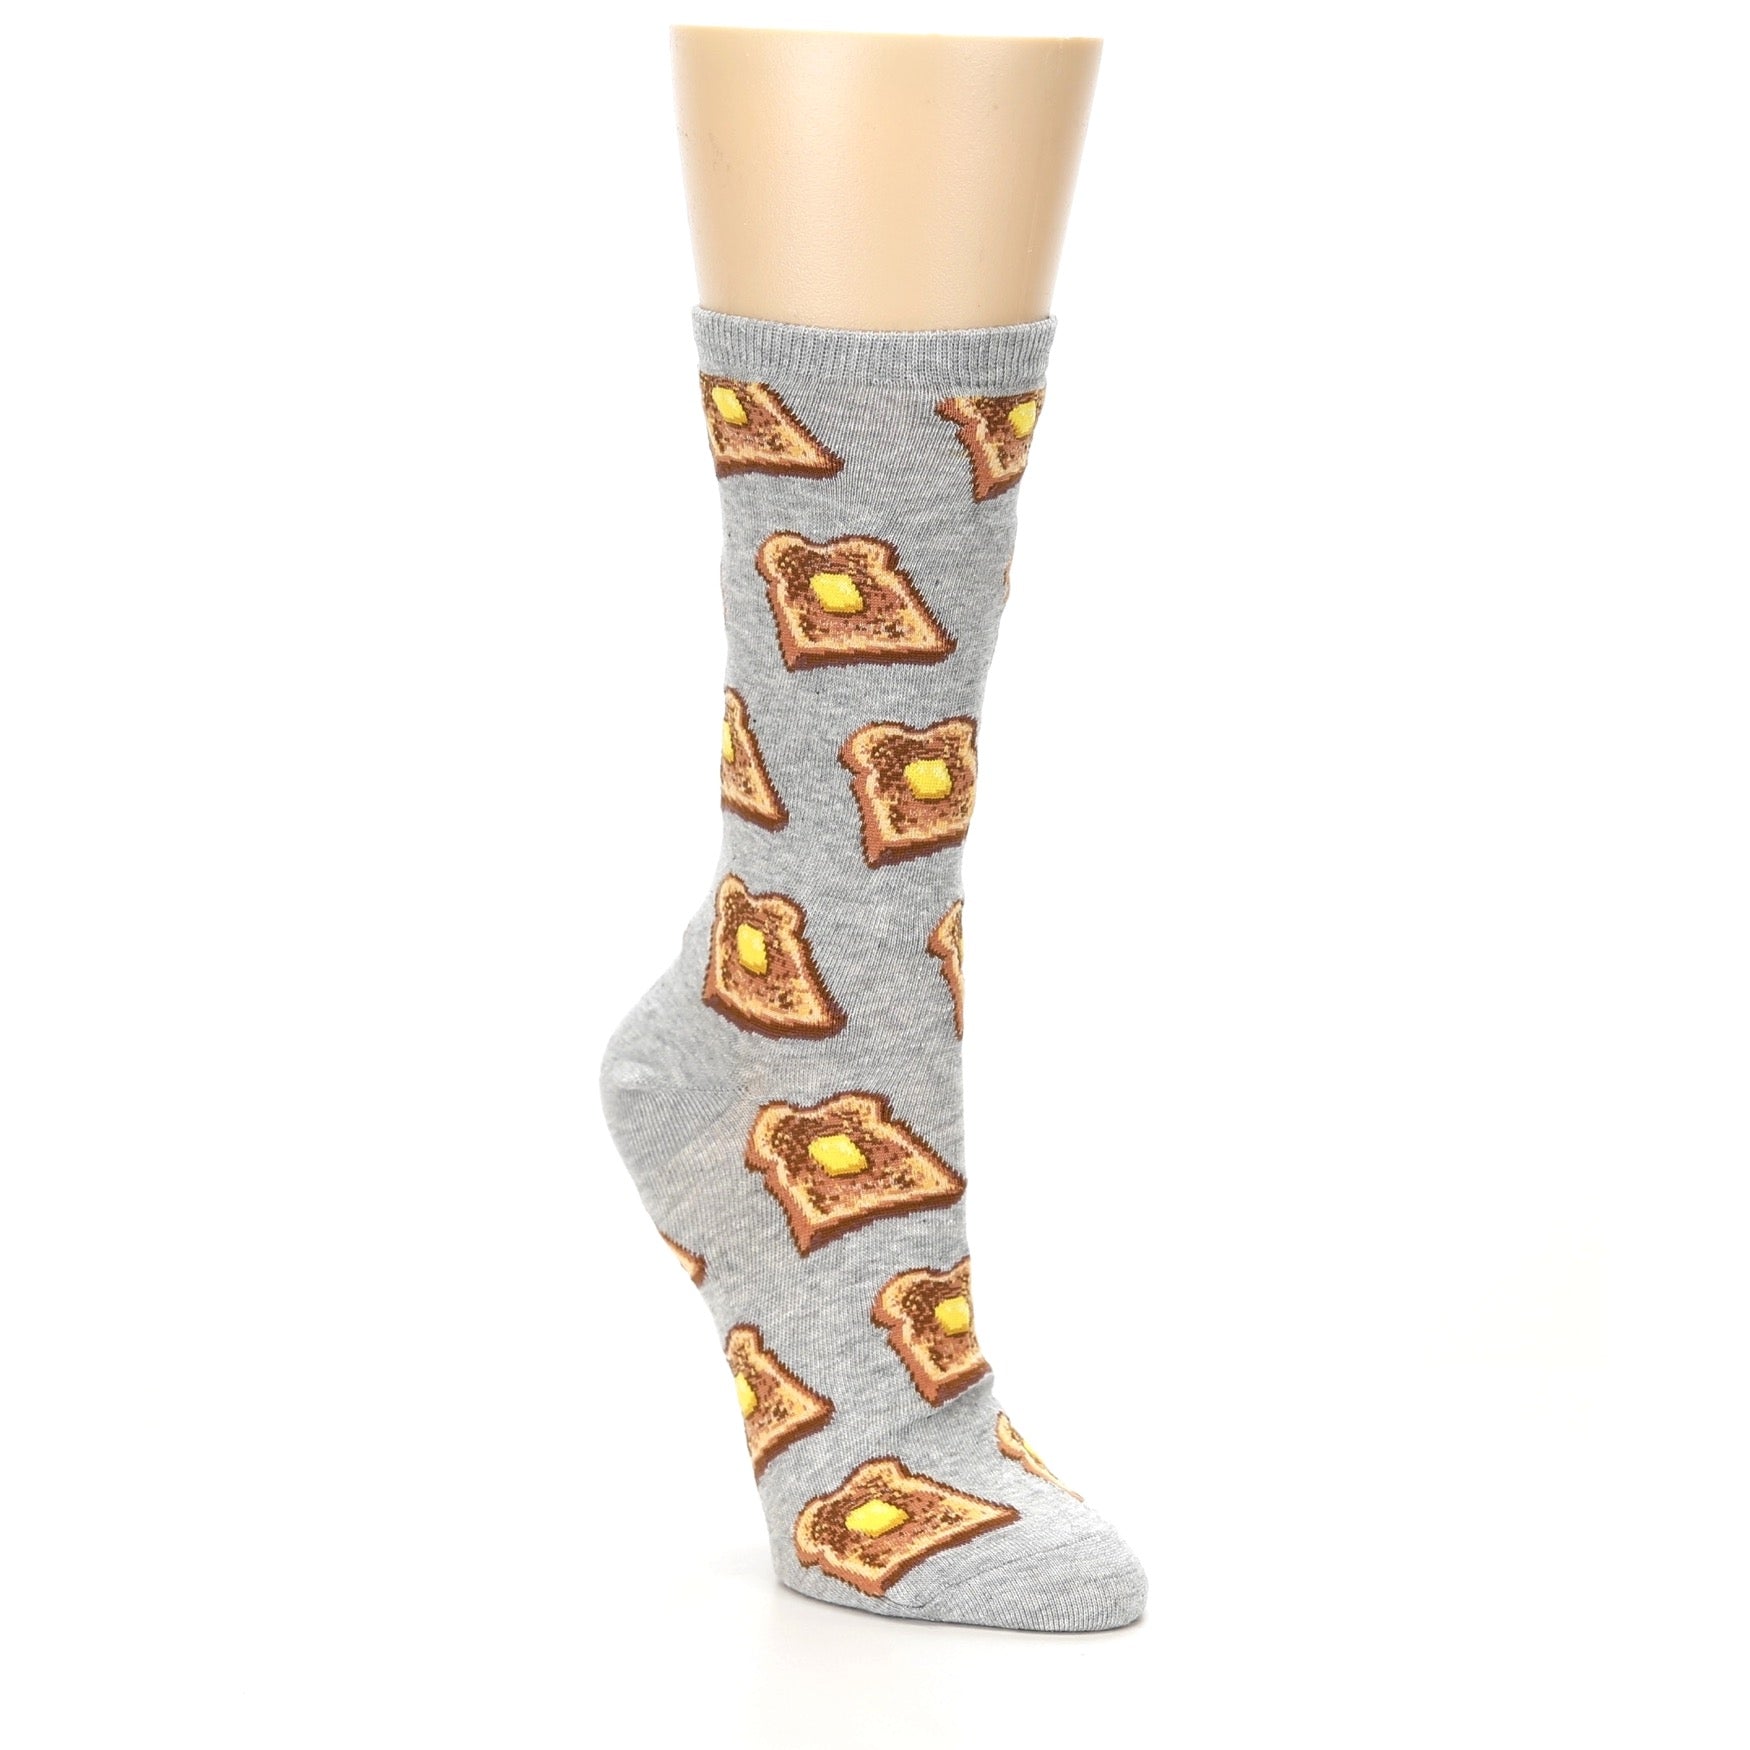 Buttered Toast Women's Dress Socks